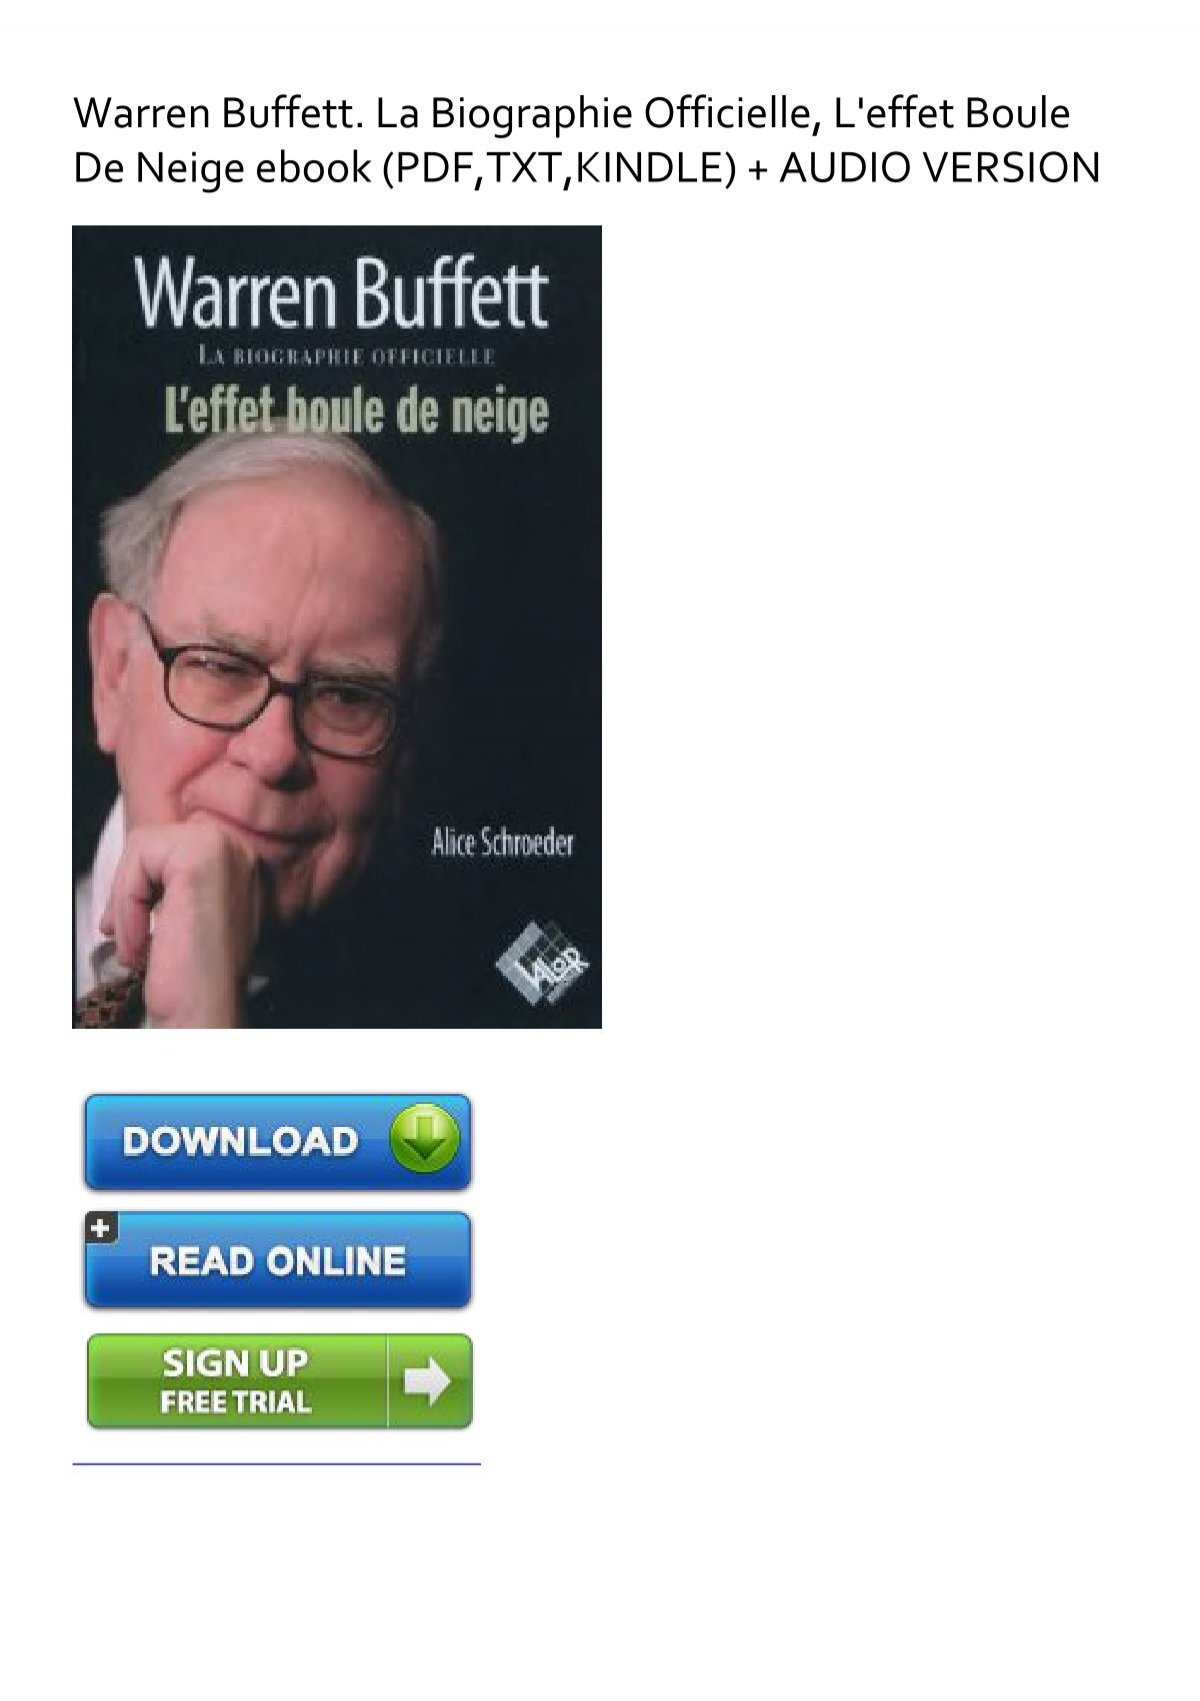  Warren Buffett: La biographie officielle. L'effet